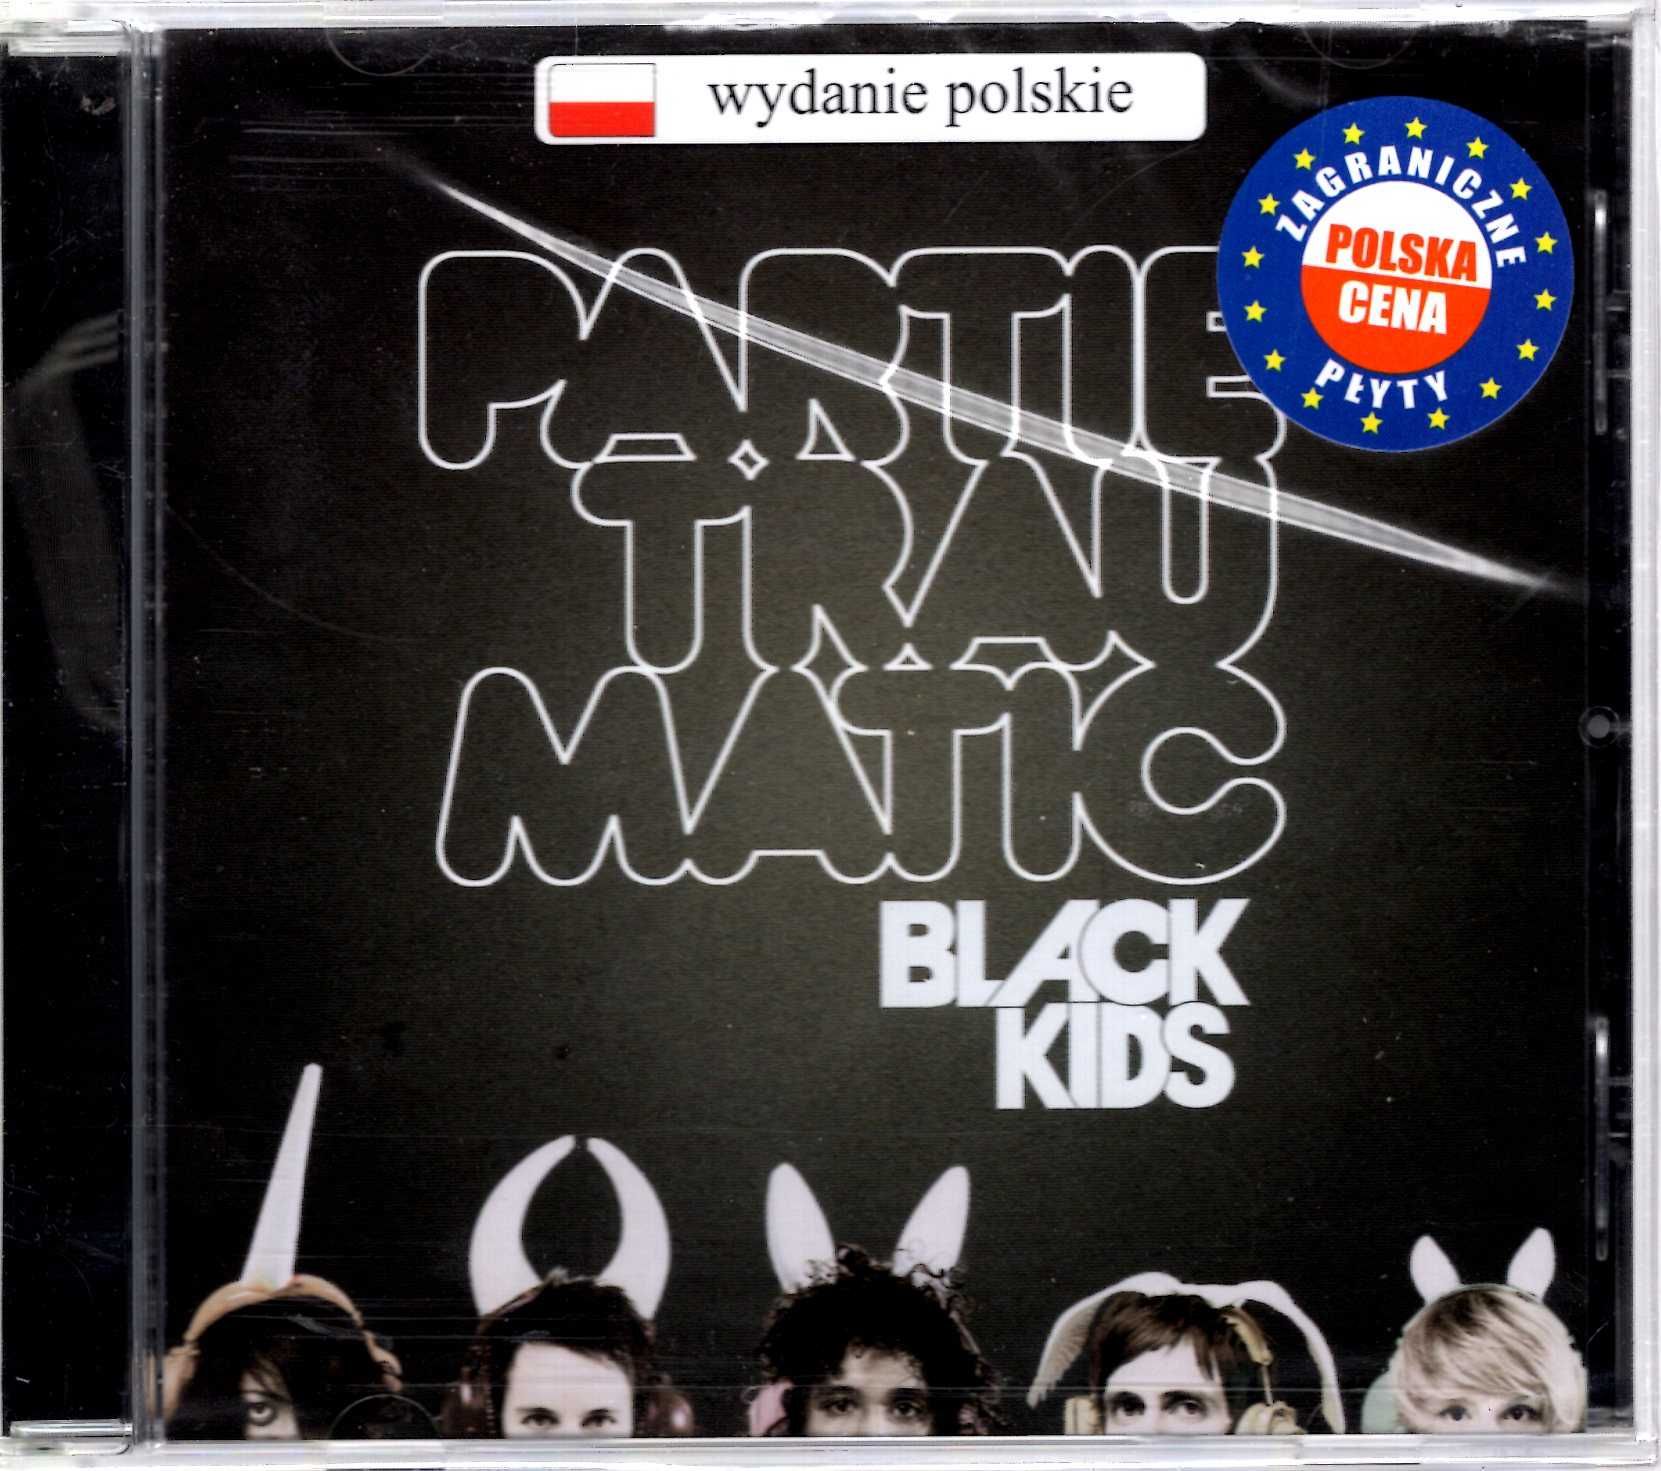 Black Kids - Partie Traumatic (Polska Cena) (CD)